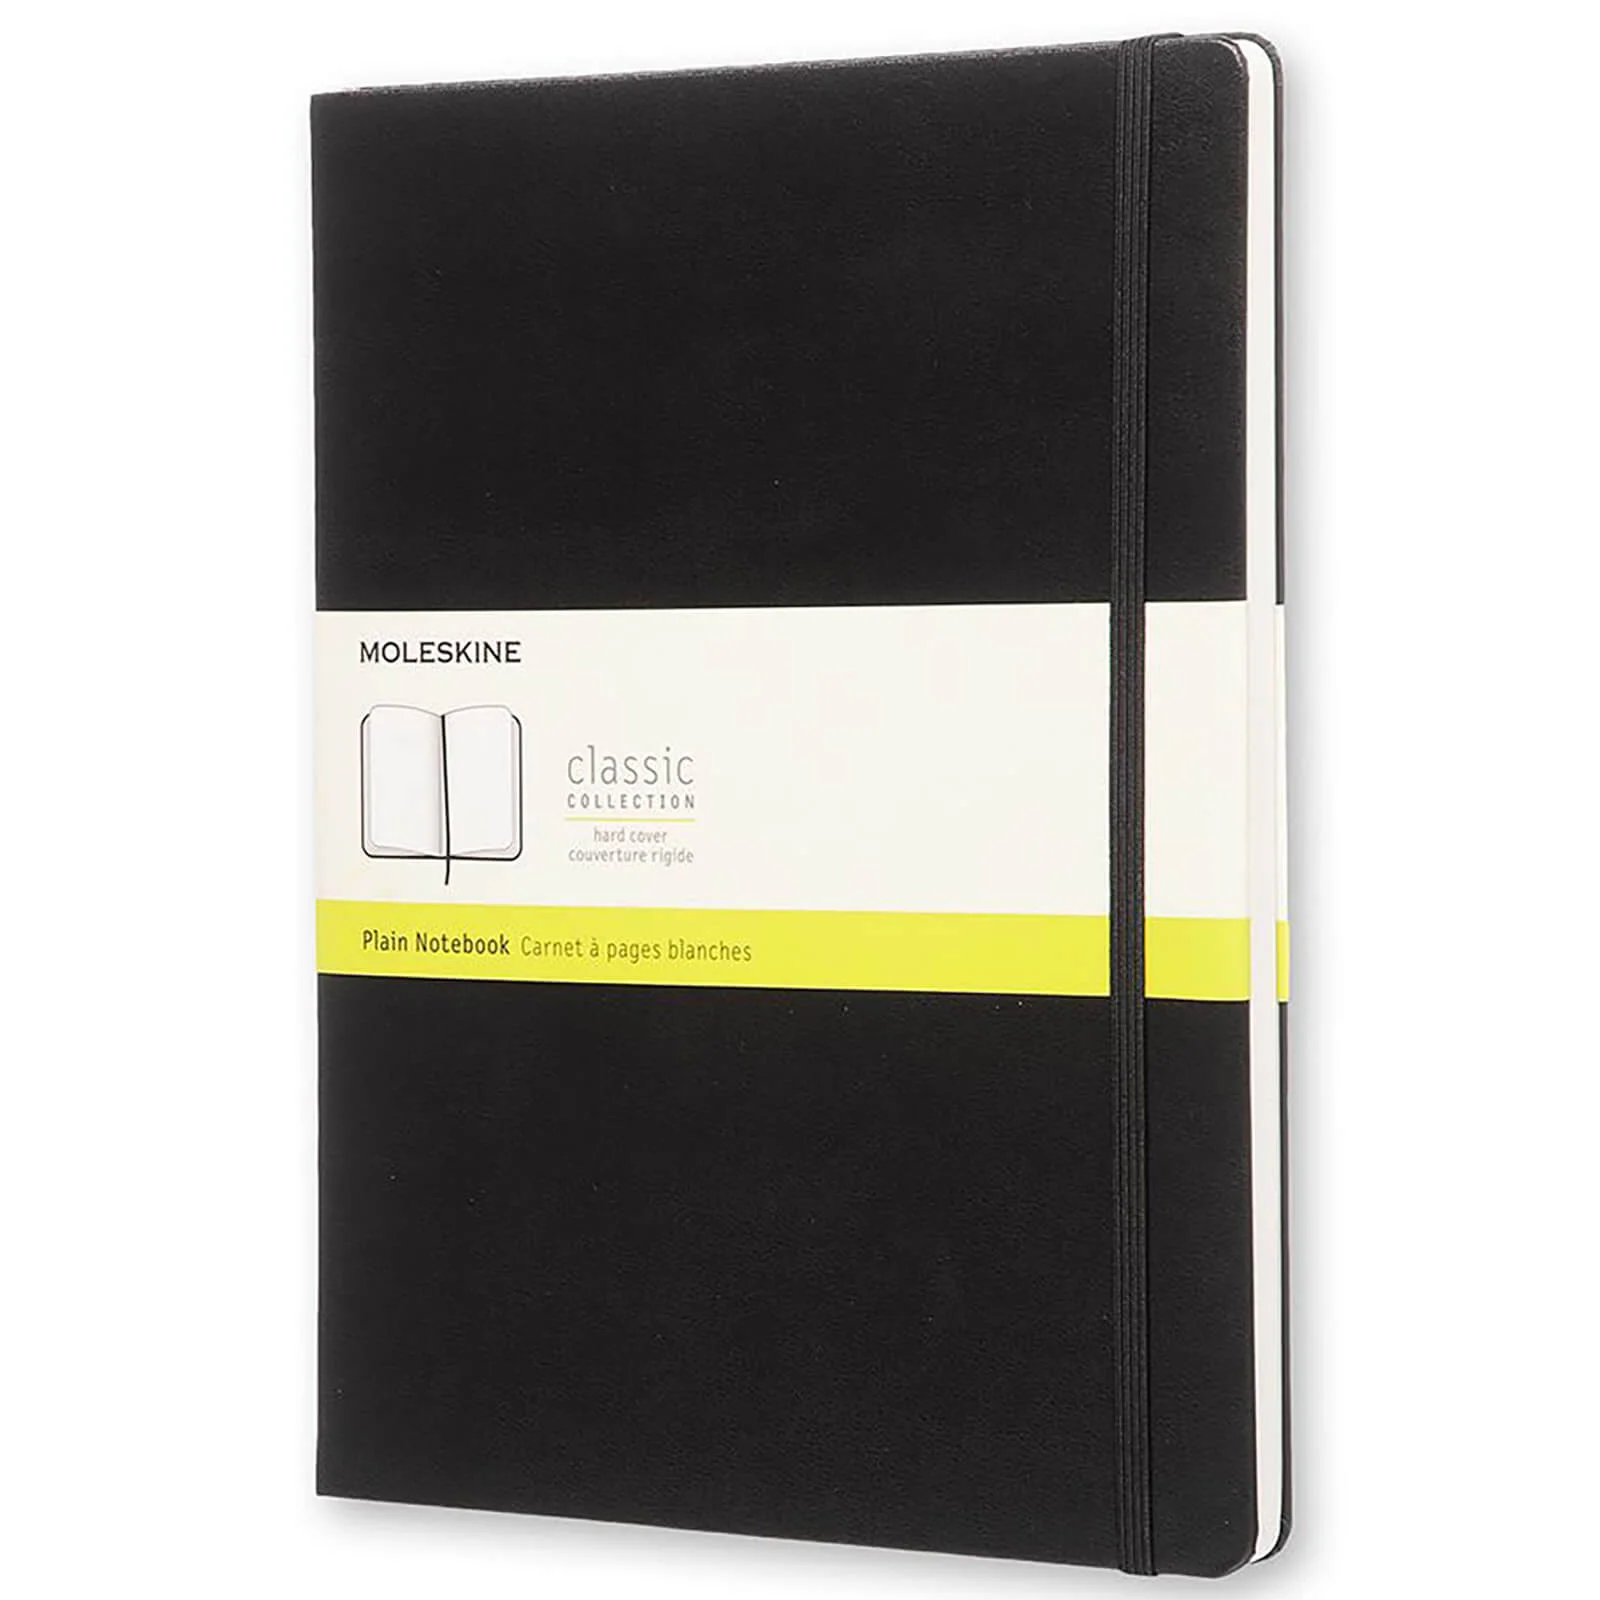 Moleskine Classic Plain Hardcover XL Notebook - Black Image 1